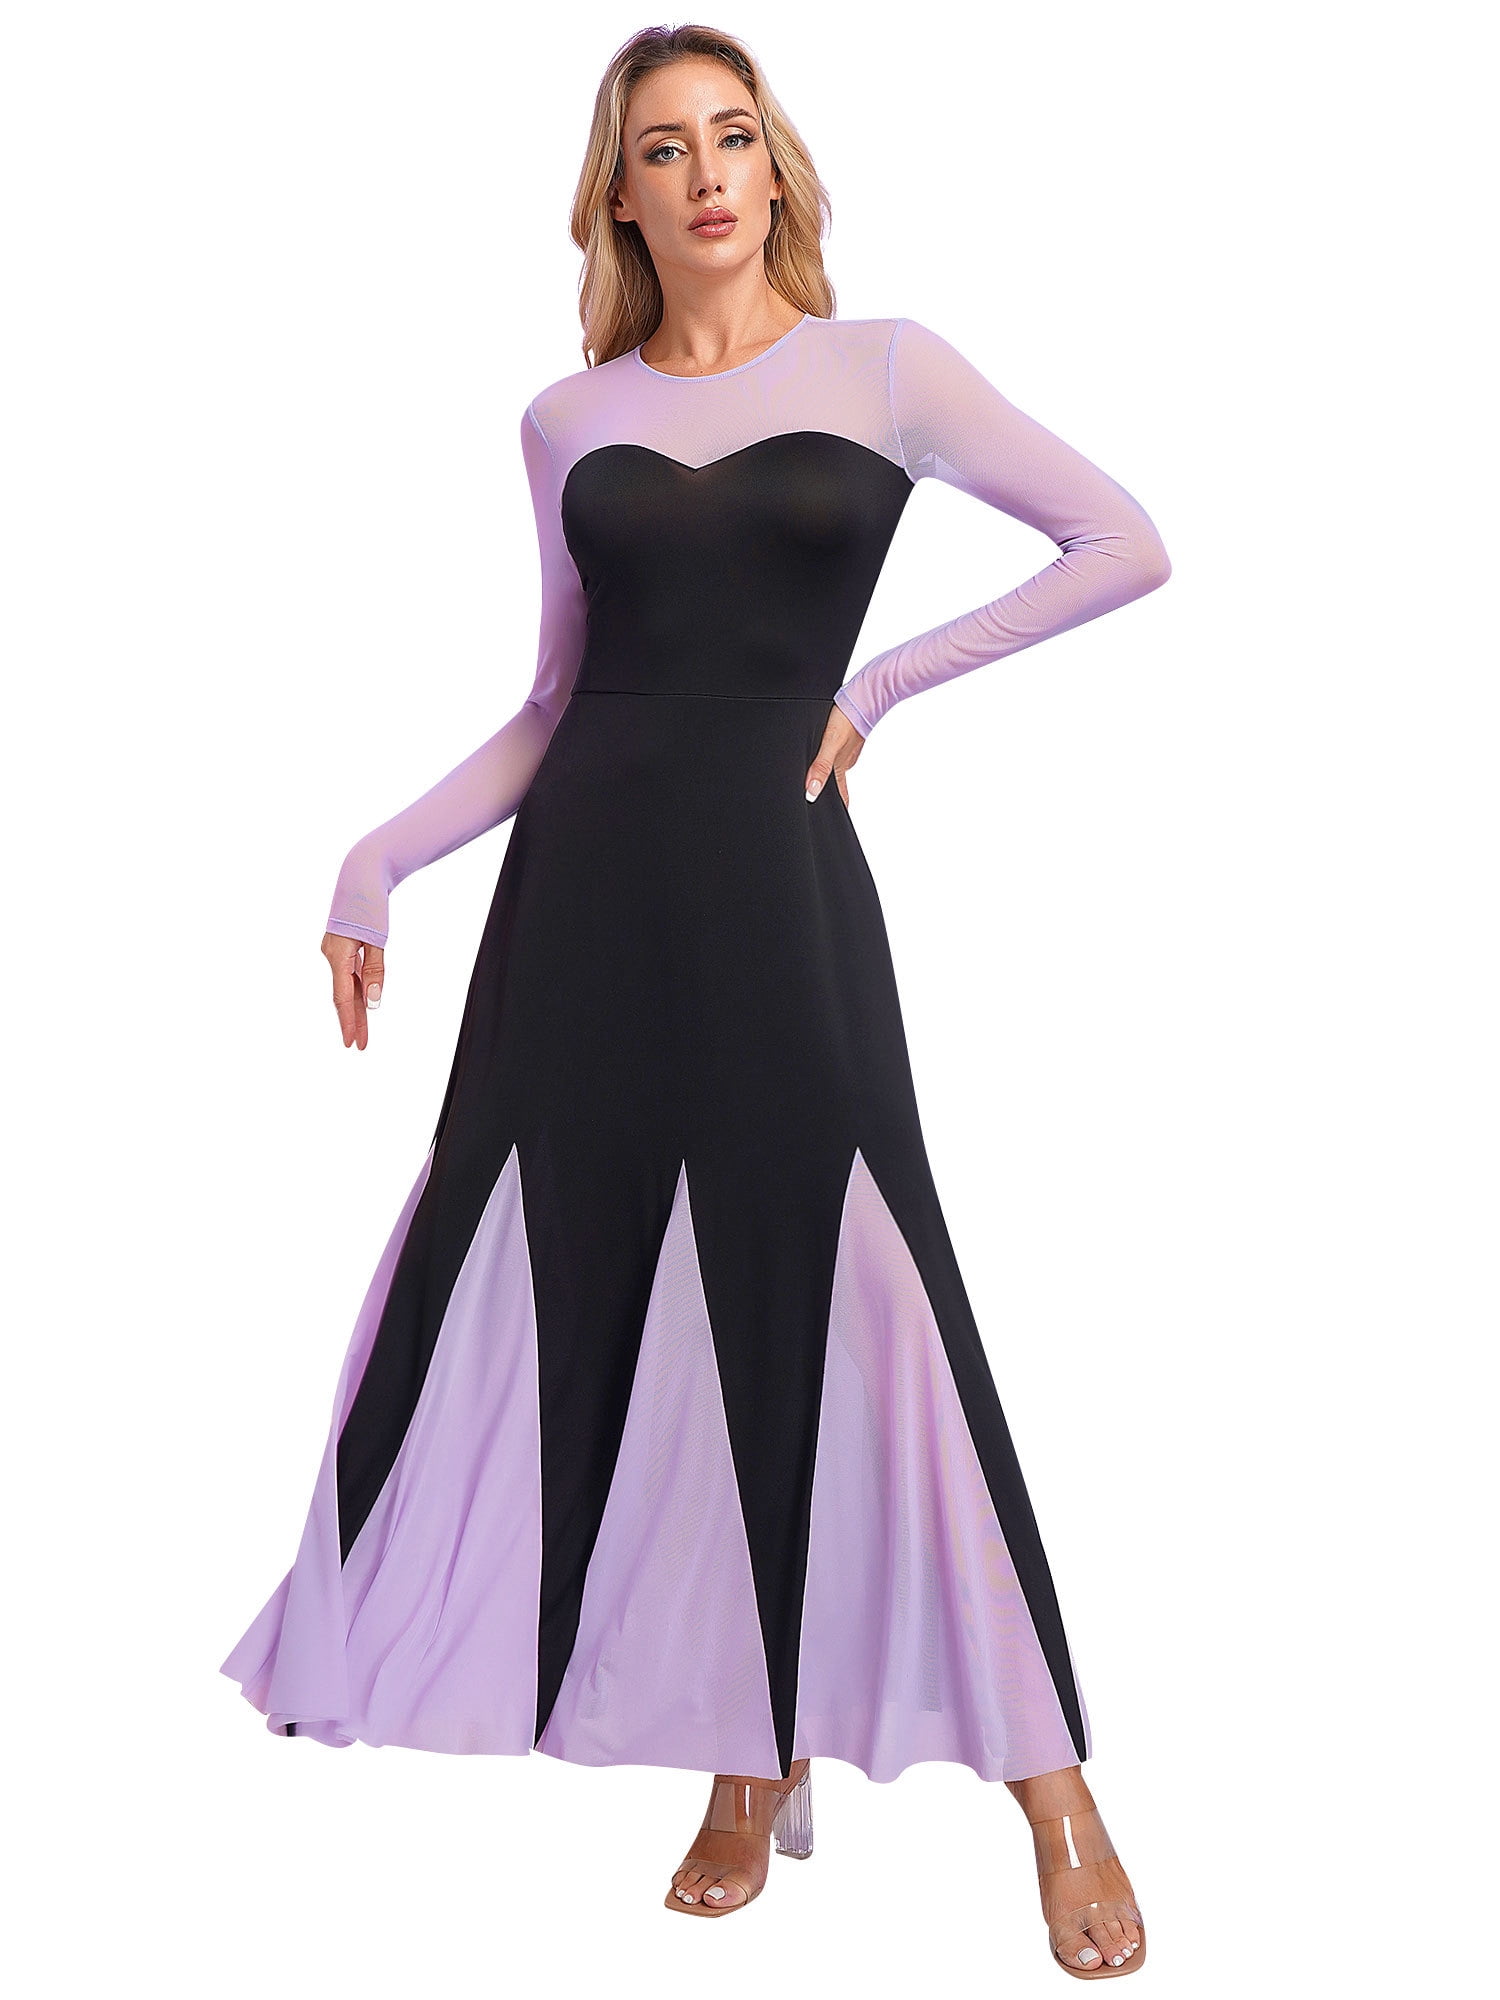 Catherines Women's Plus Size Scoopneck Maxi Dress